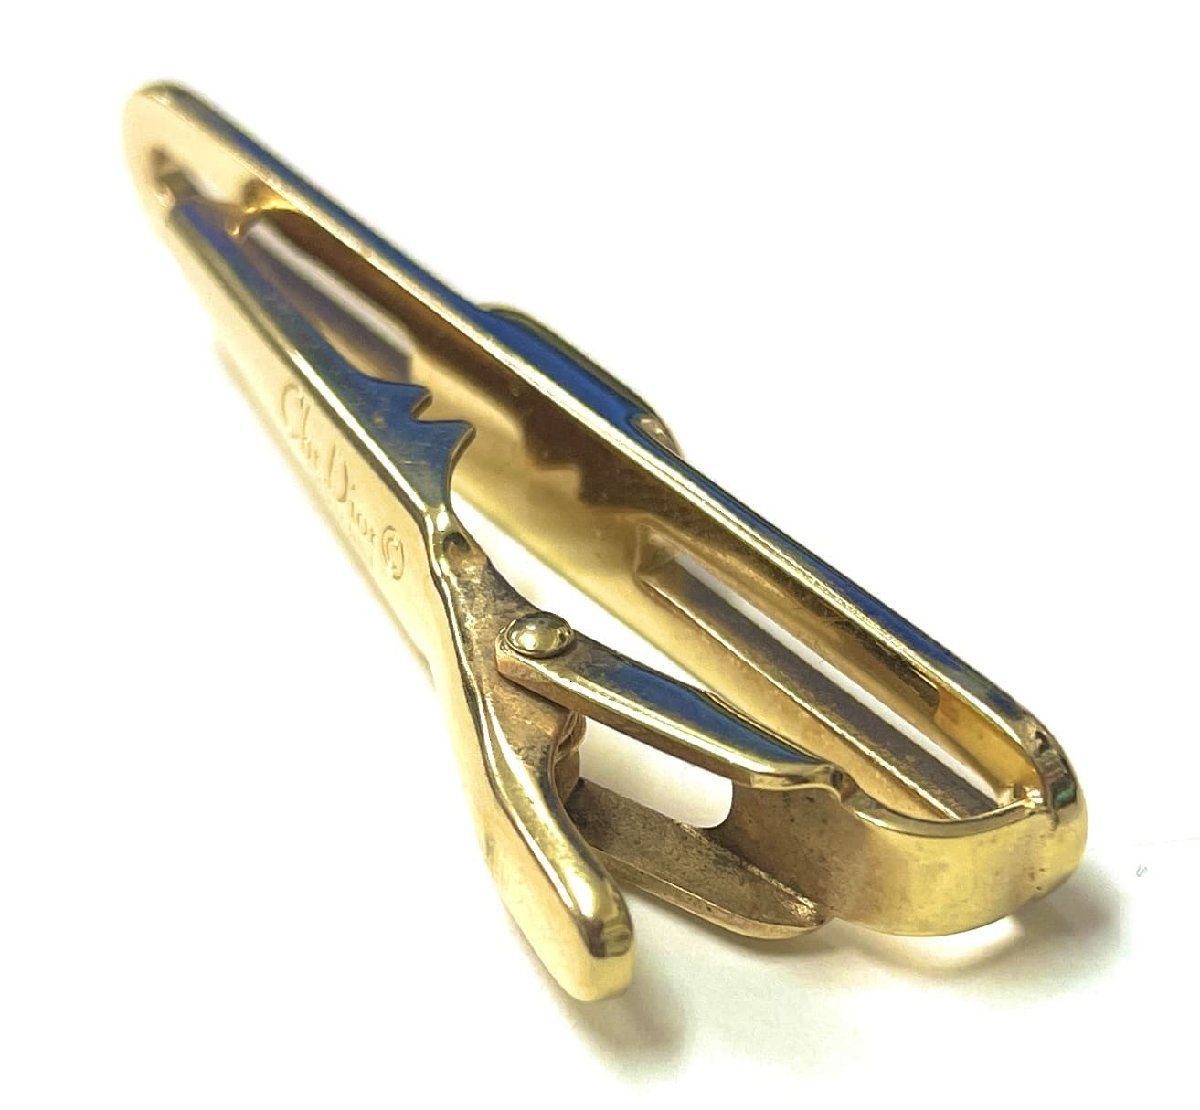  Christian Dior булавка для галстука Thai зажим Gold Thai балка Thai зажим мужской черный DIOR GP [ б/у ]